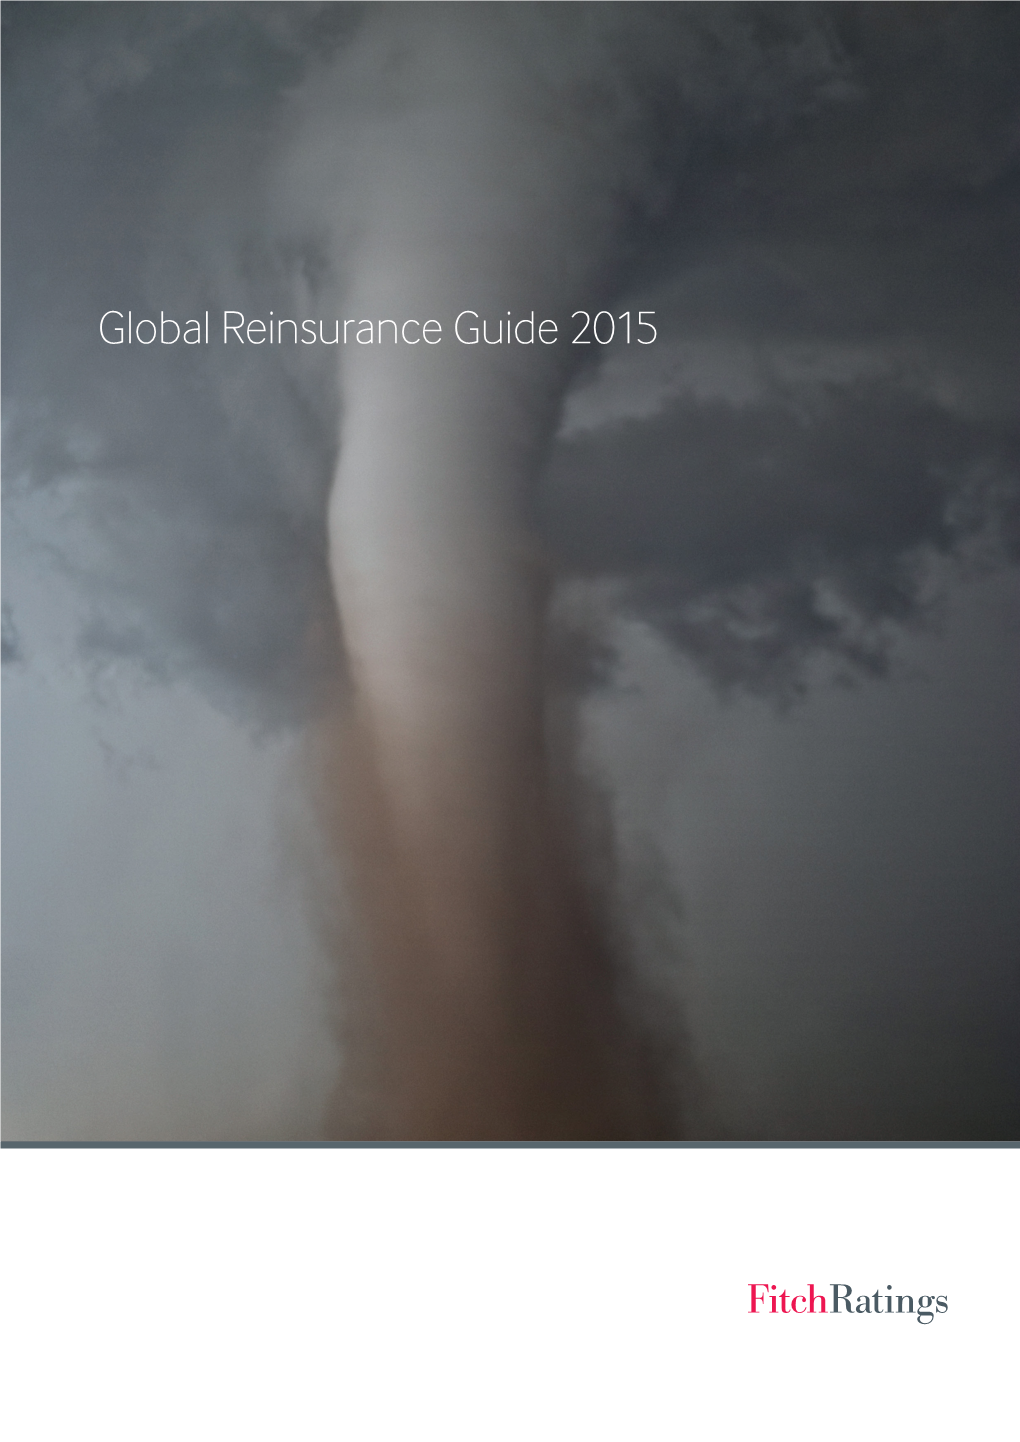 Global Reinsurance Guide 2015 Global Reinsurance Guide 2015 Contents